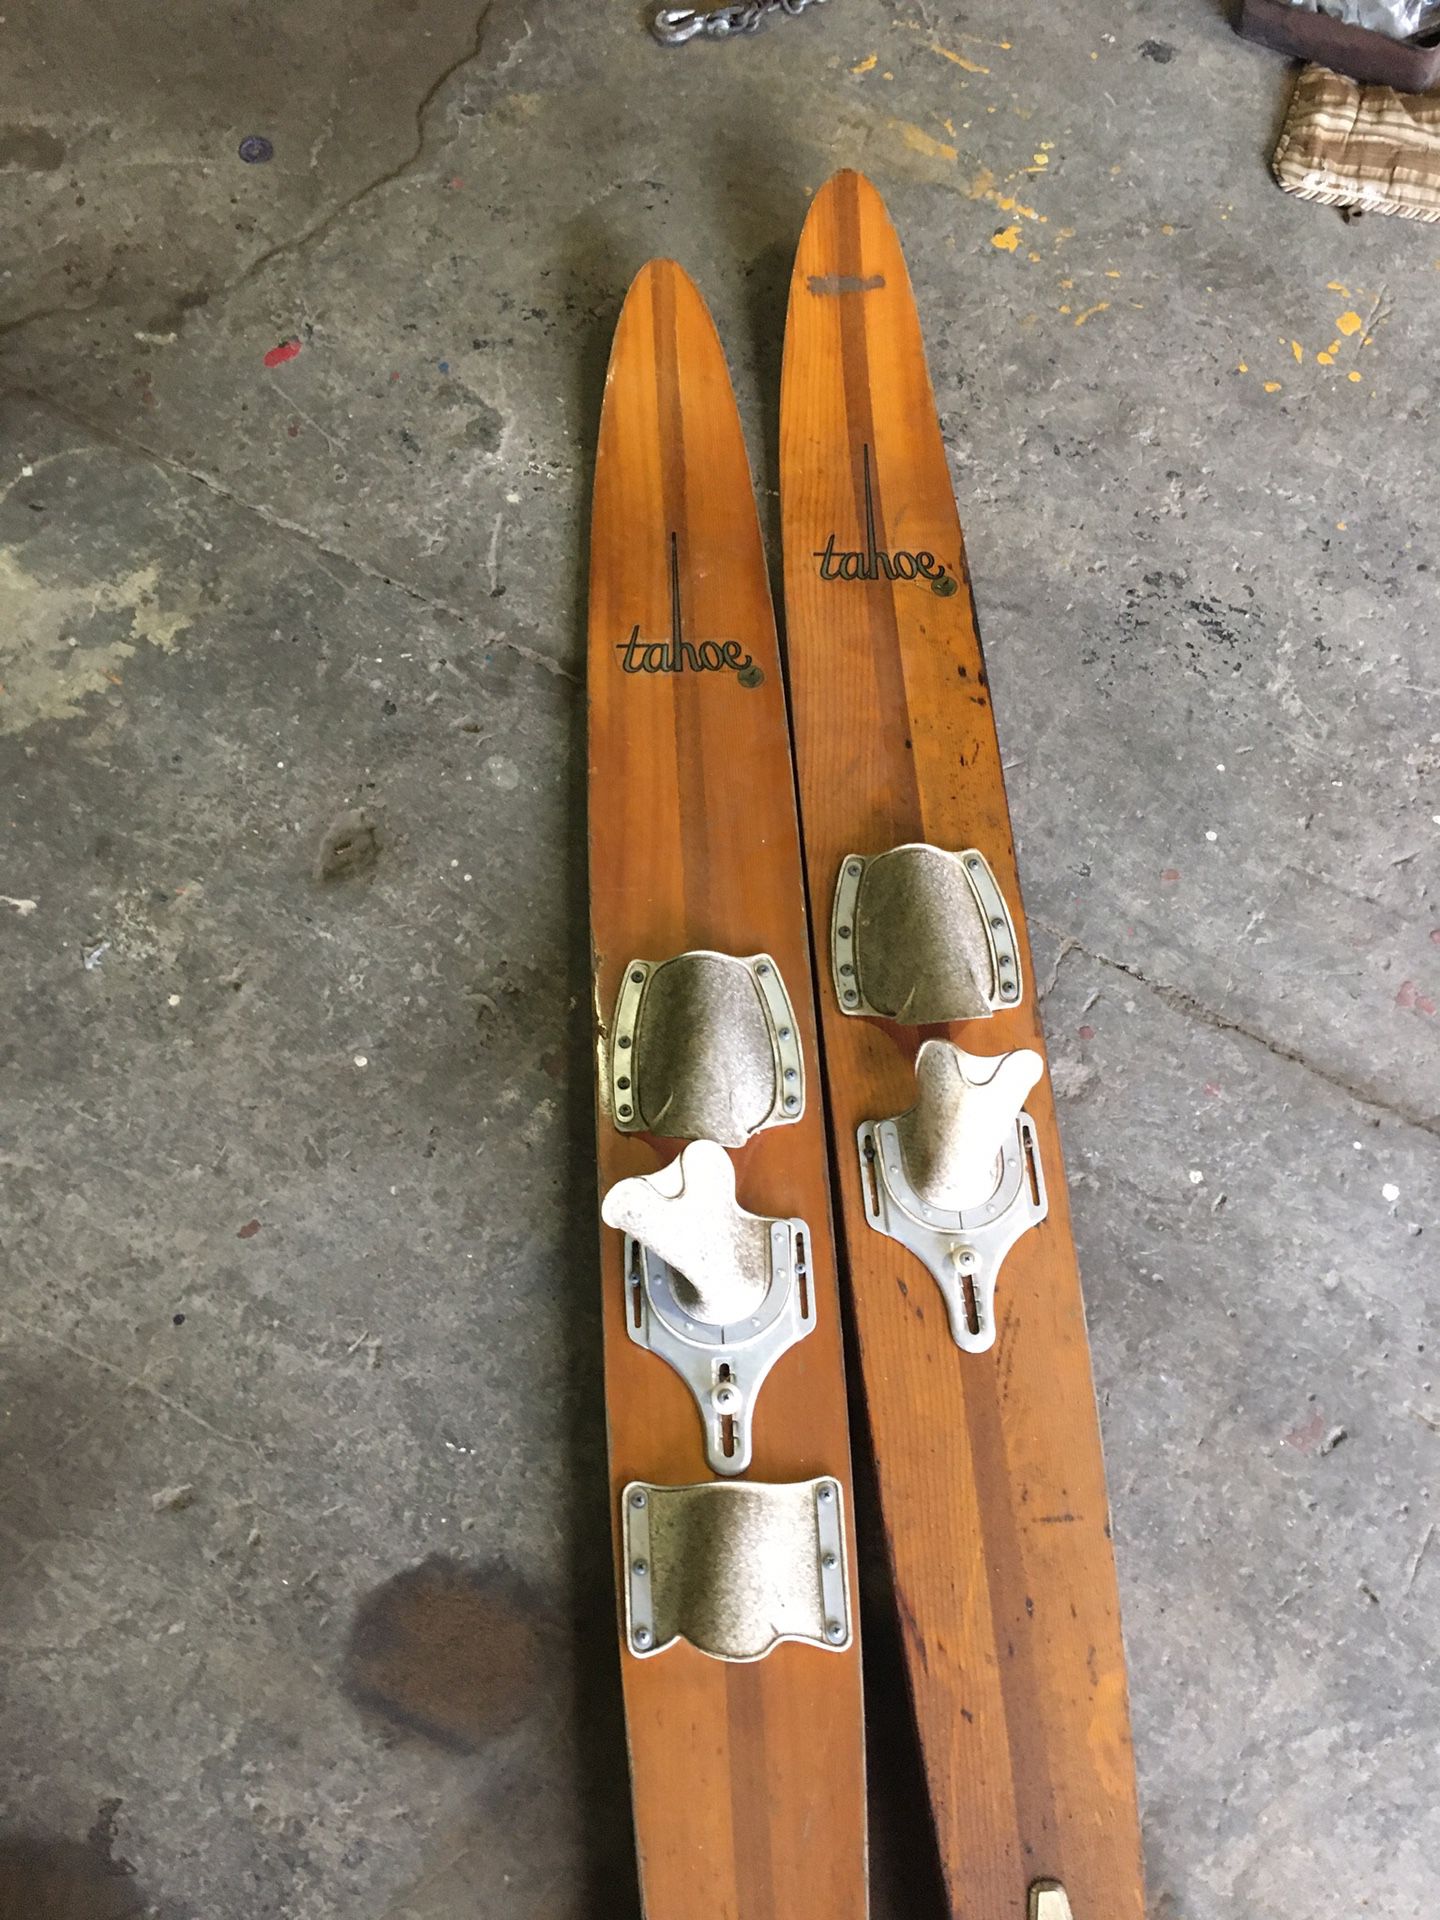 Old water ski